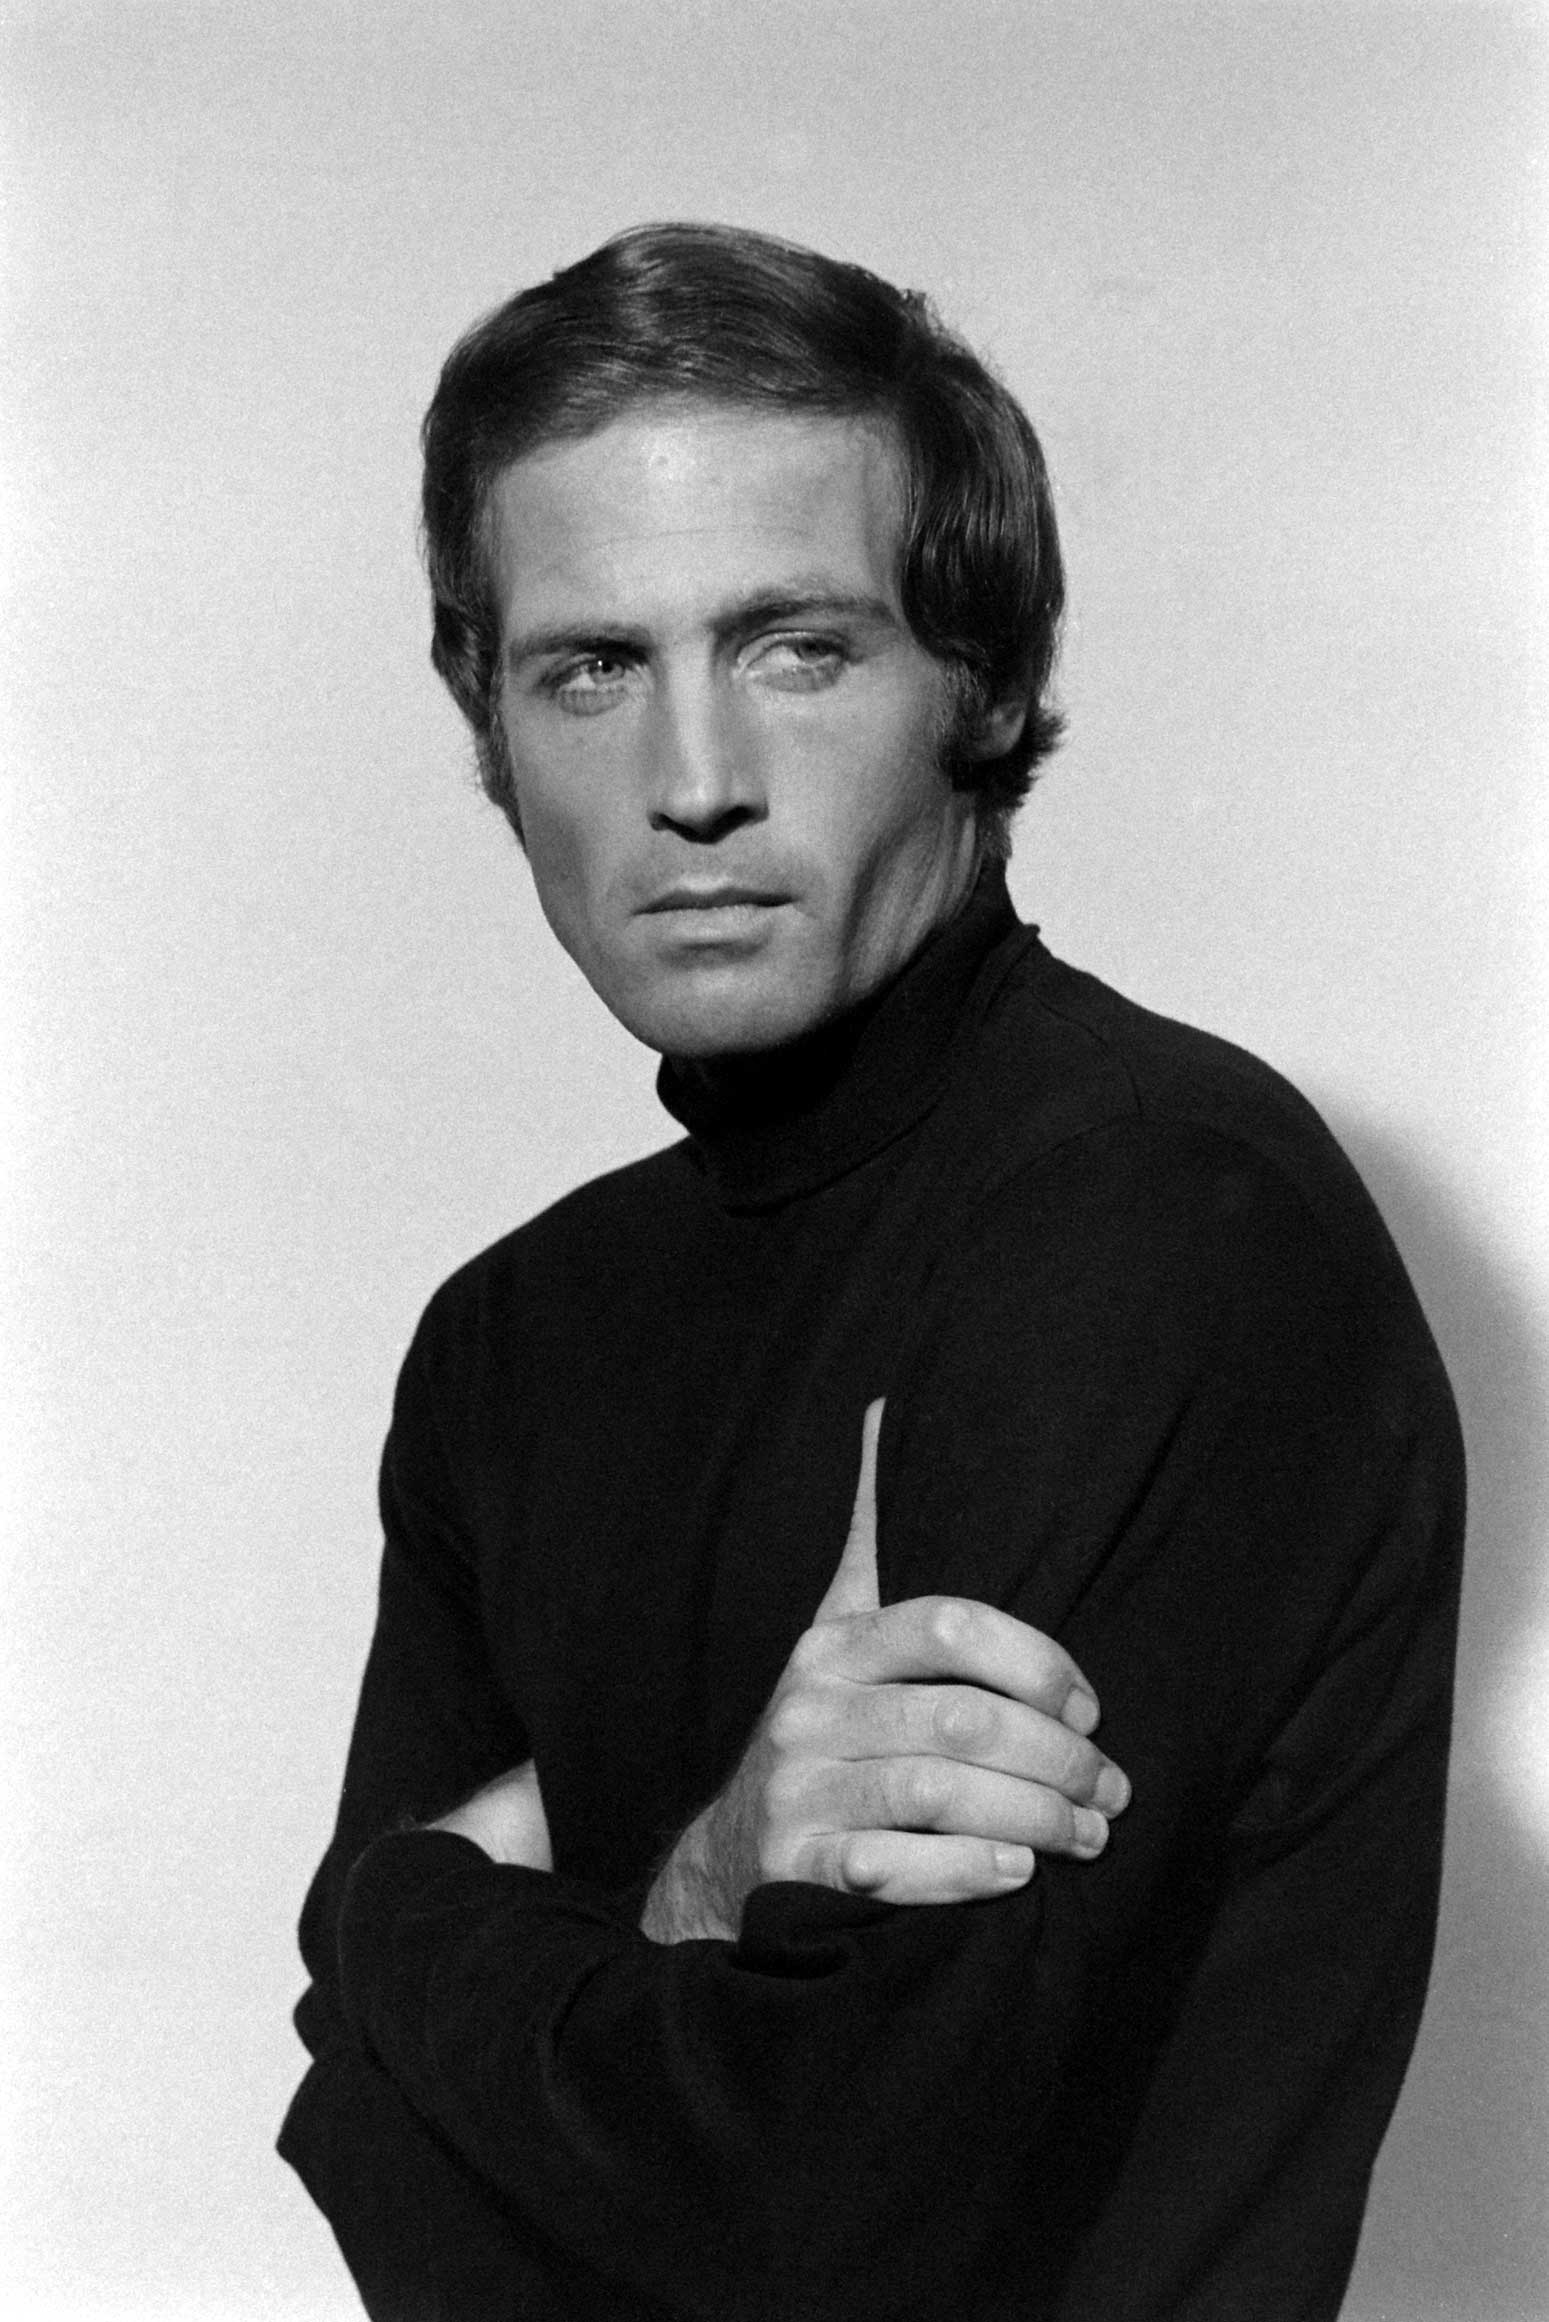 John Richardson during James Bond auditions, 1967.